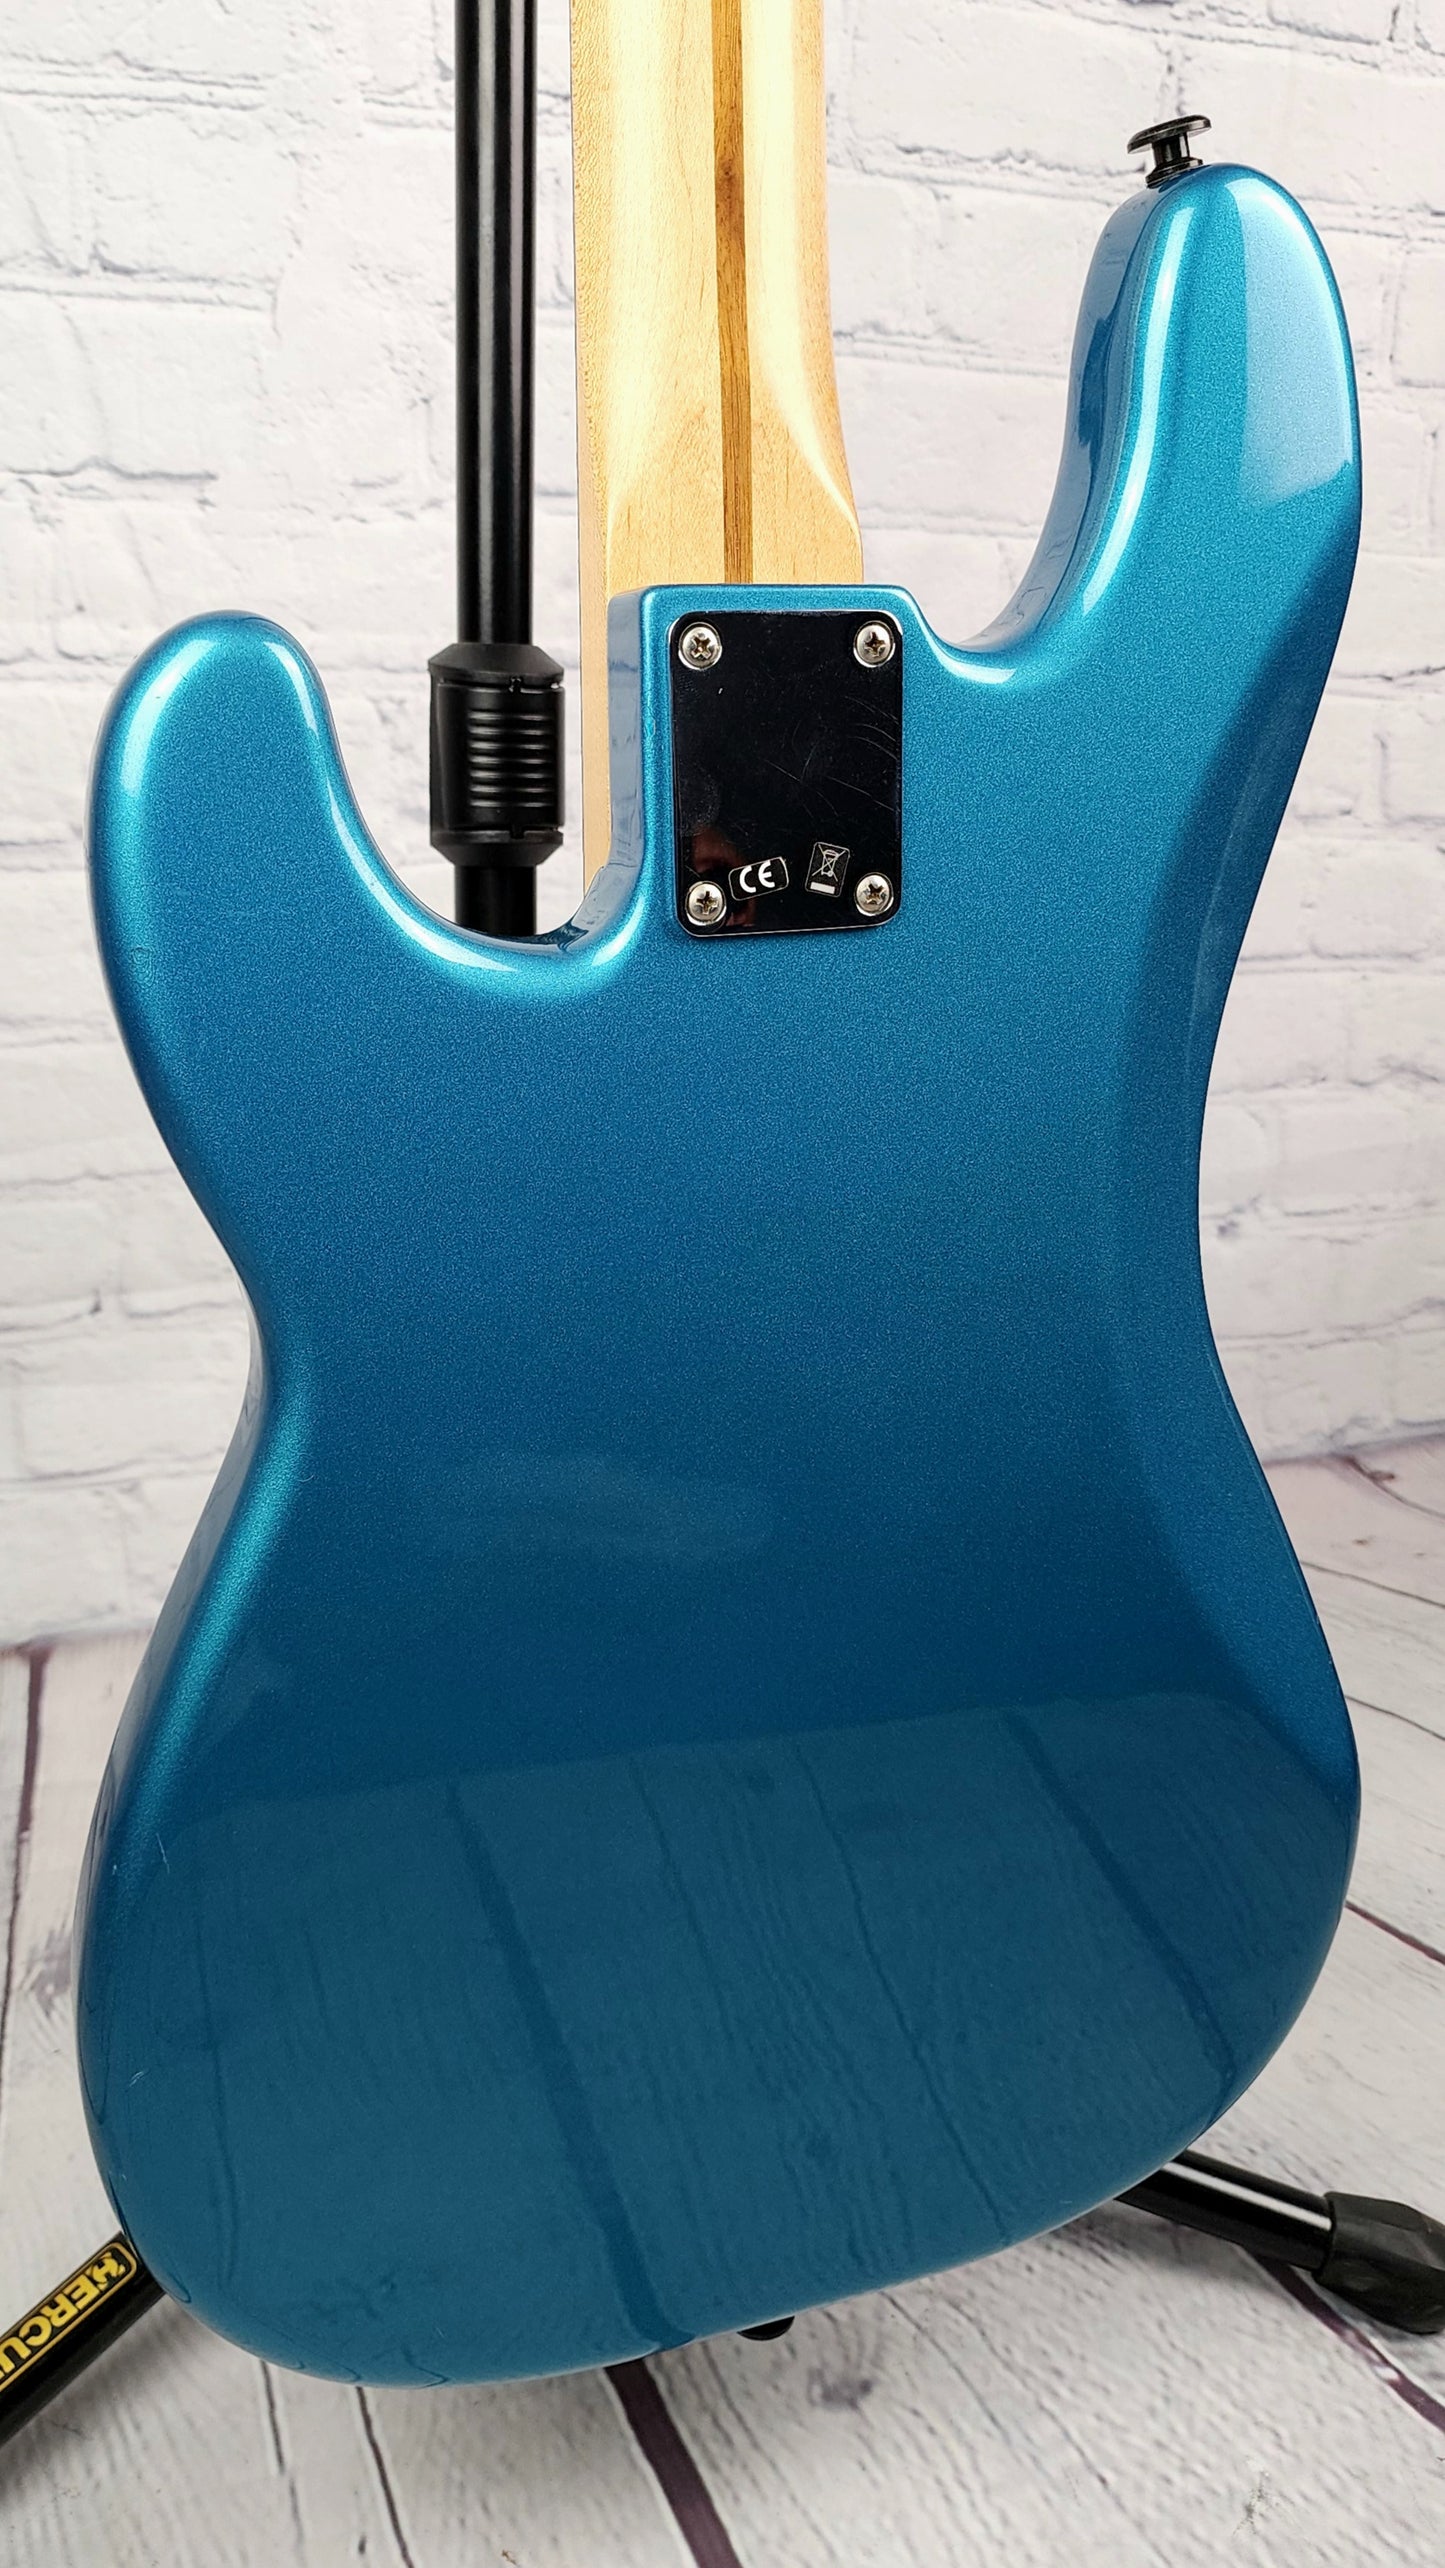 USED Fender Precision Bass MIM 4 String Bass Guitar Lake Placid Blue